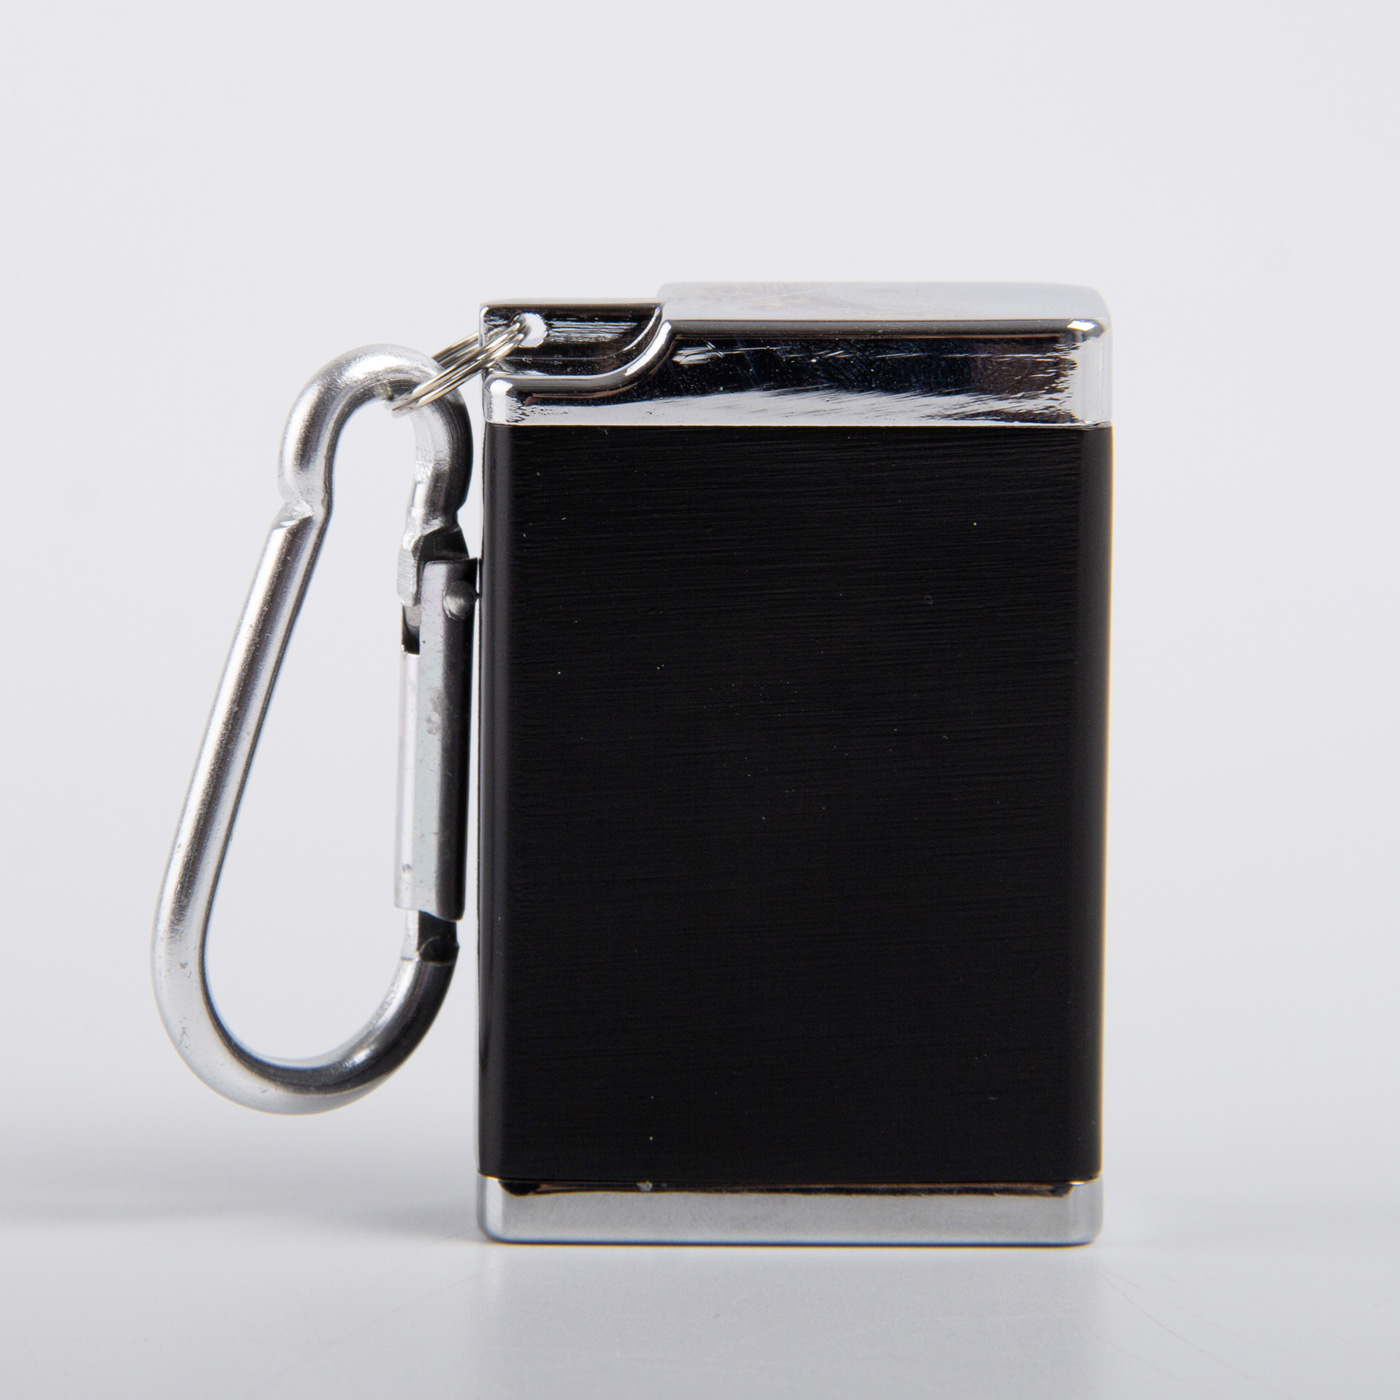 Portable Ashtray With Keychain4